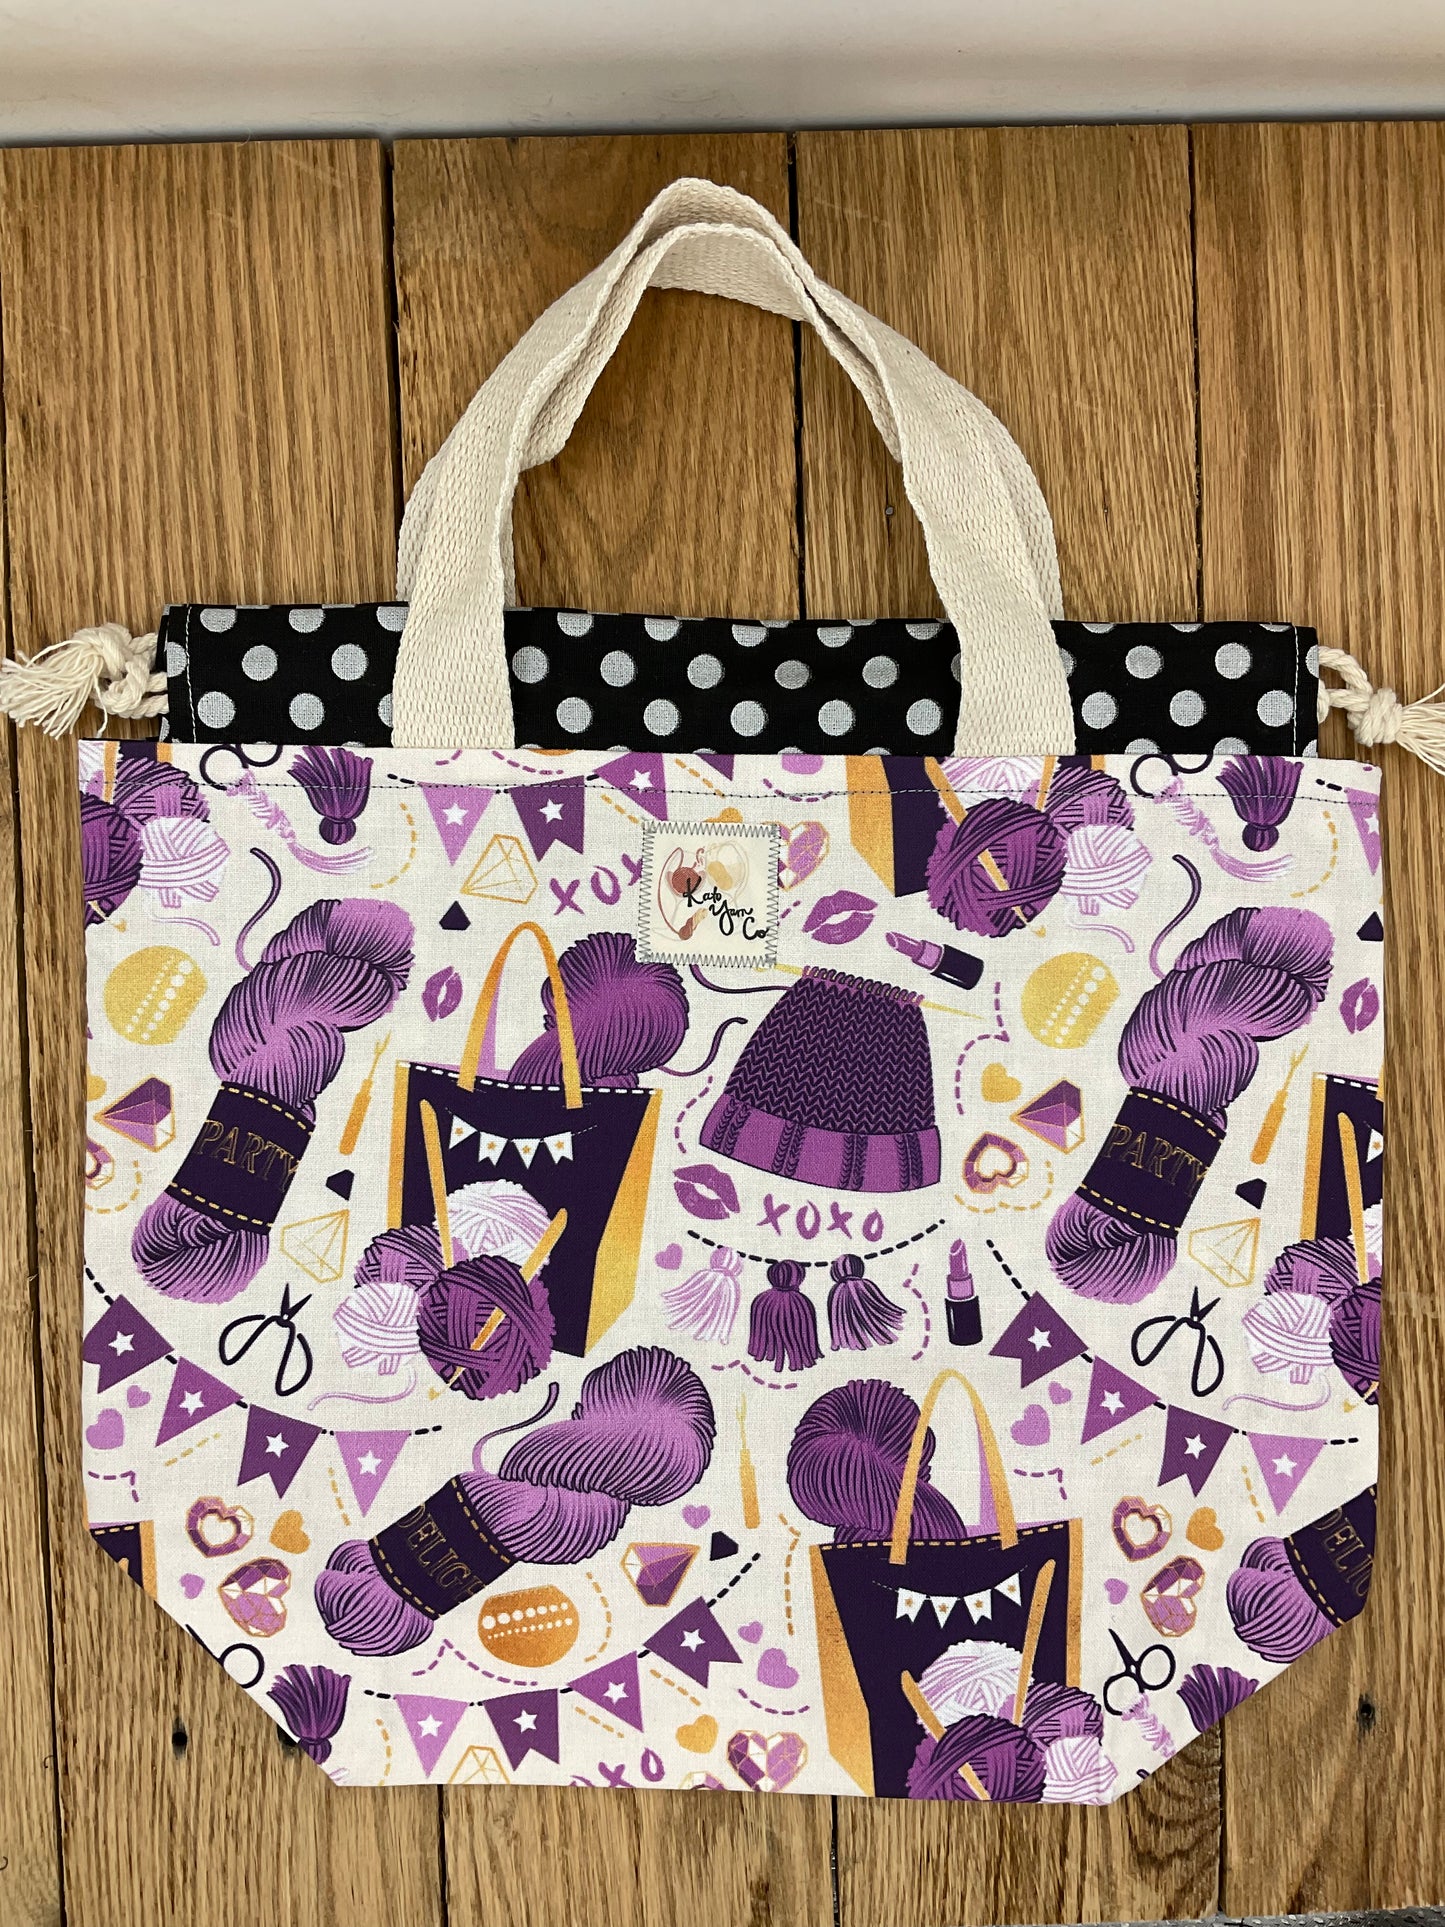 Knitting Purple -  Project Bag